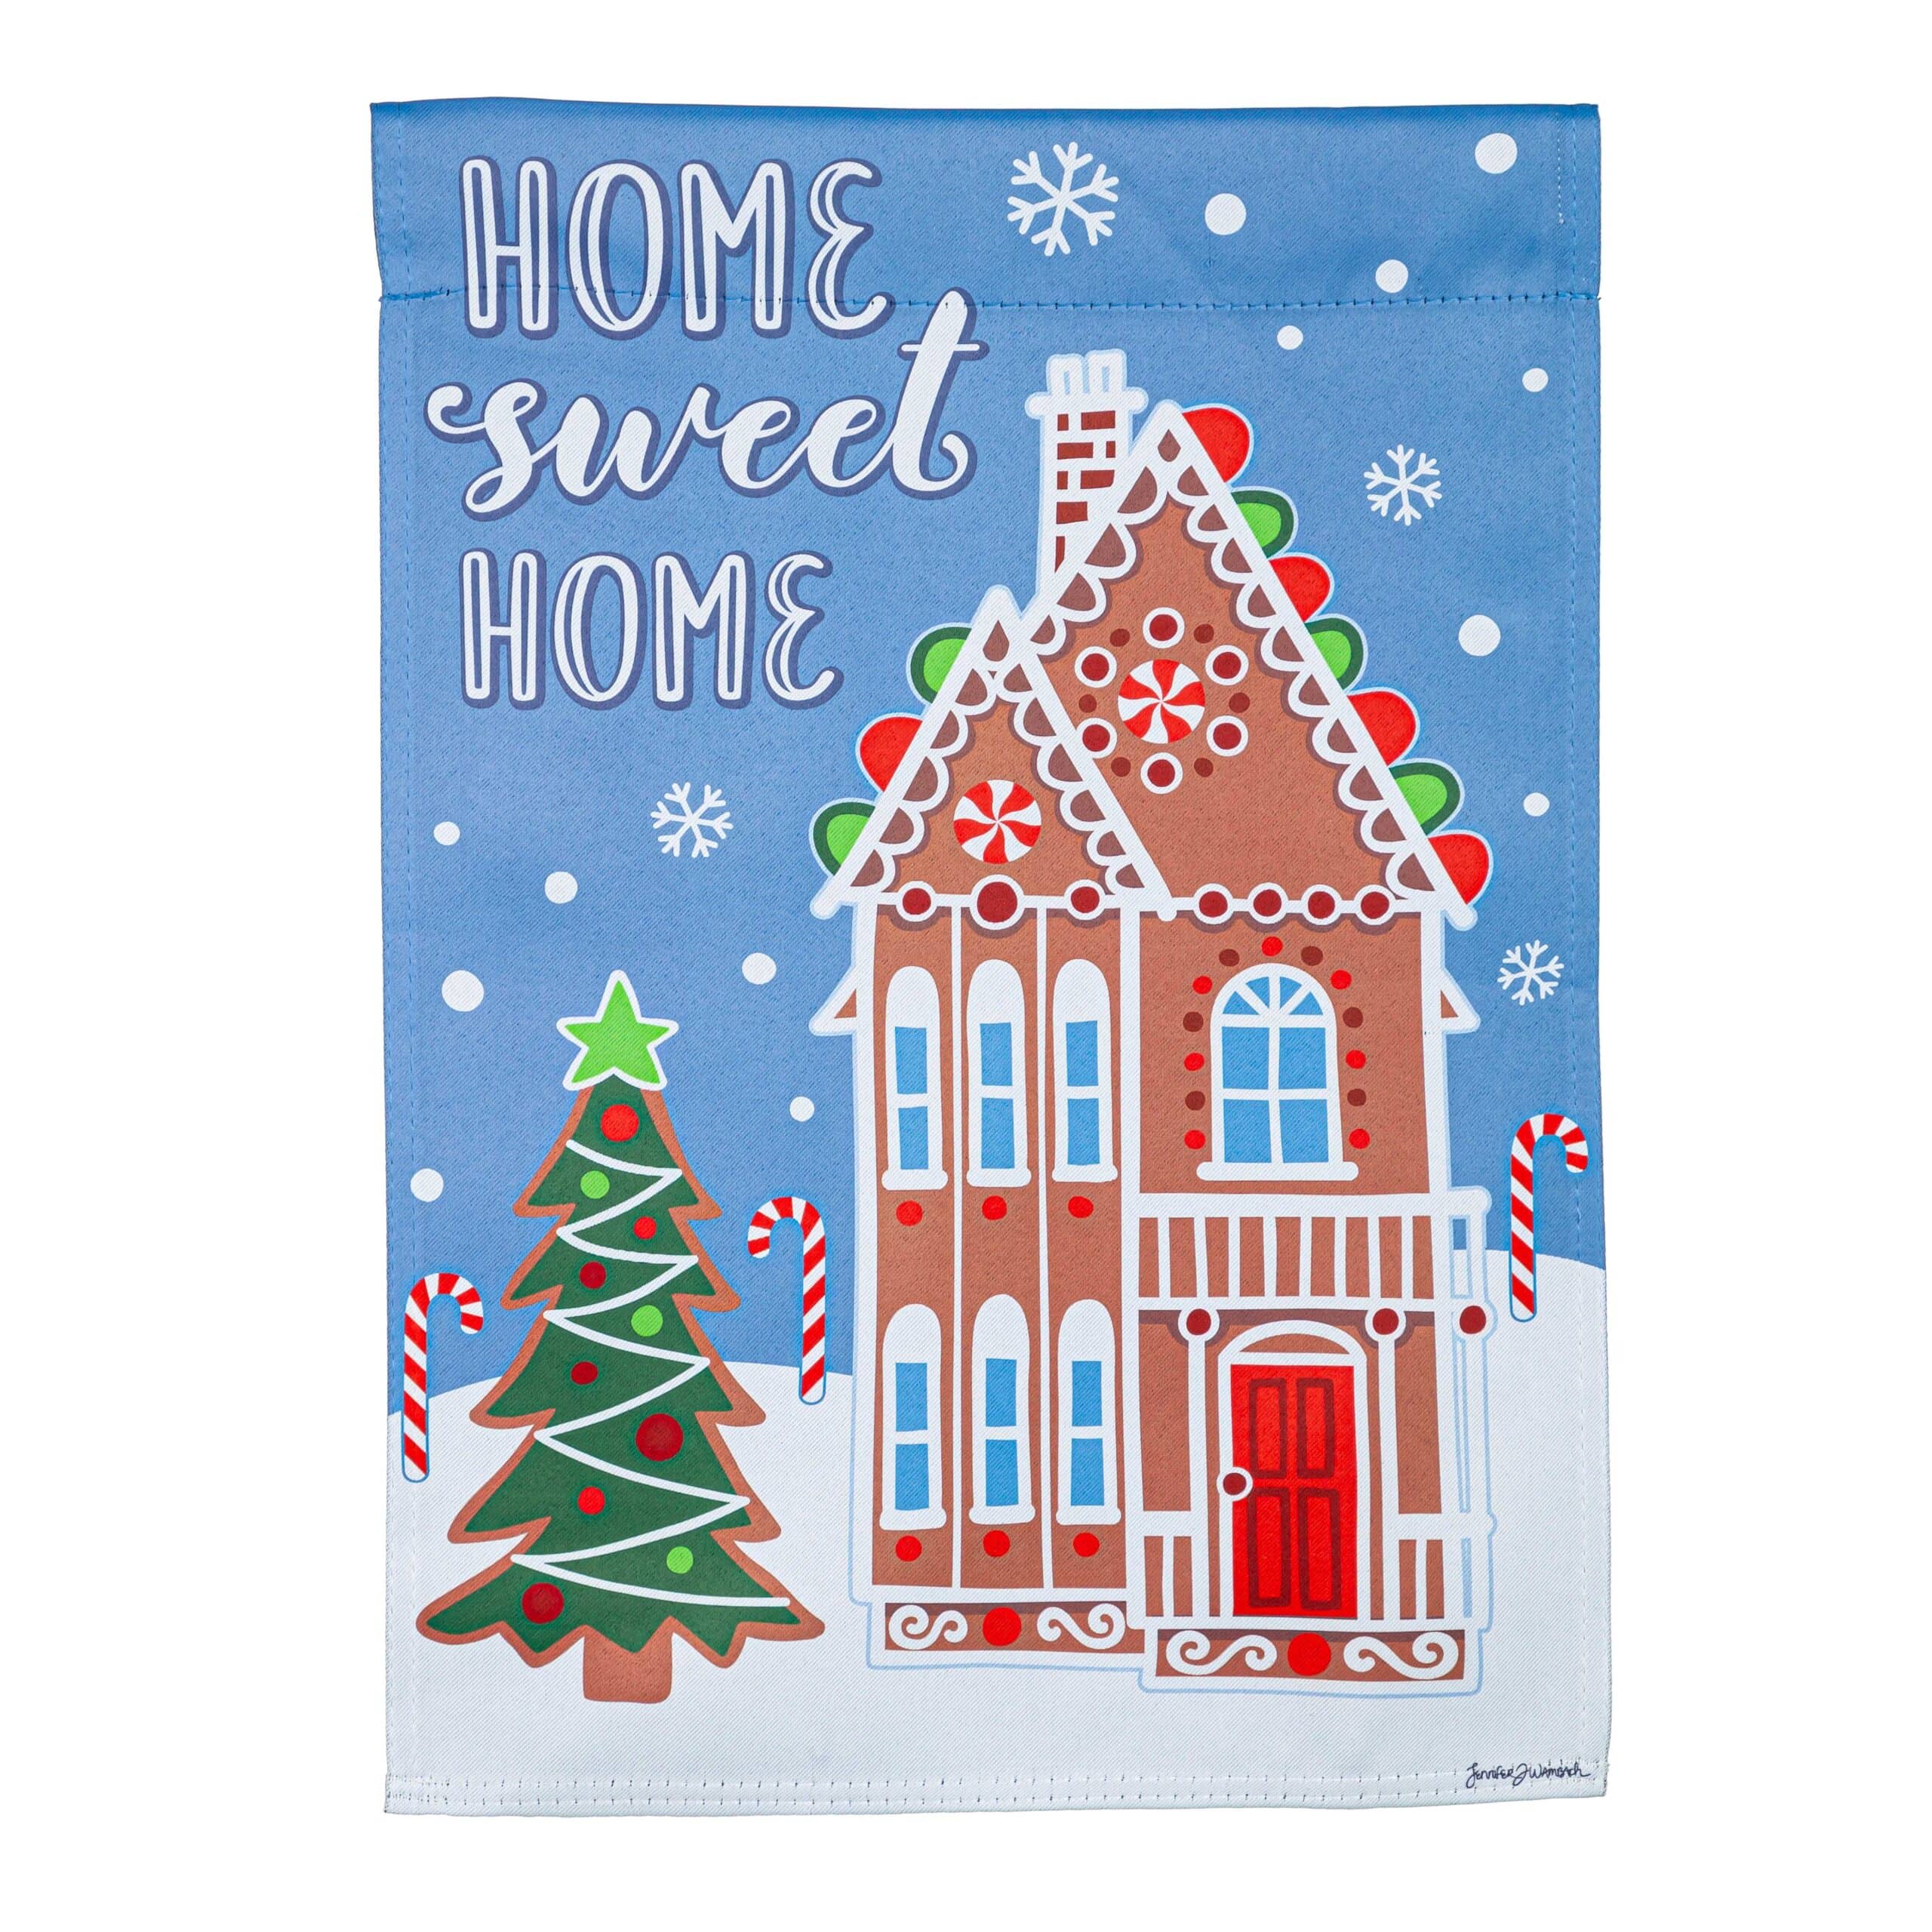 Gingerbread Home Sweet Home Garden Flag image